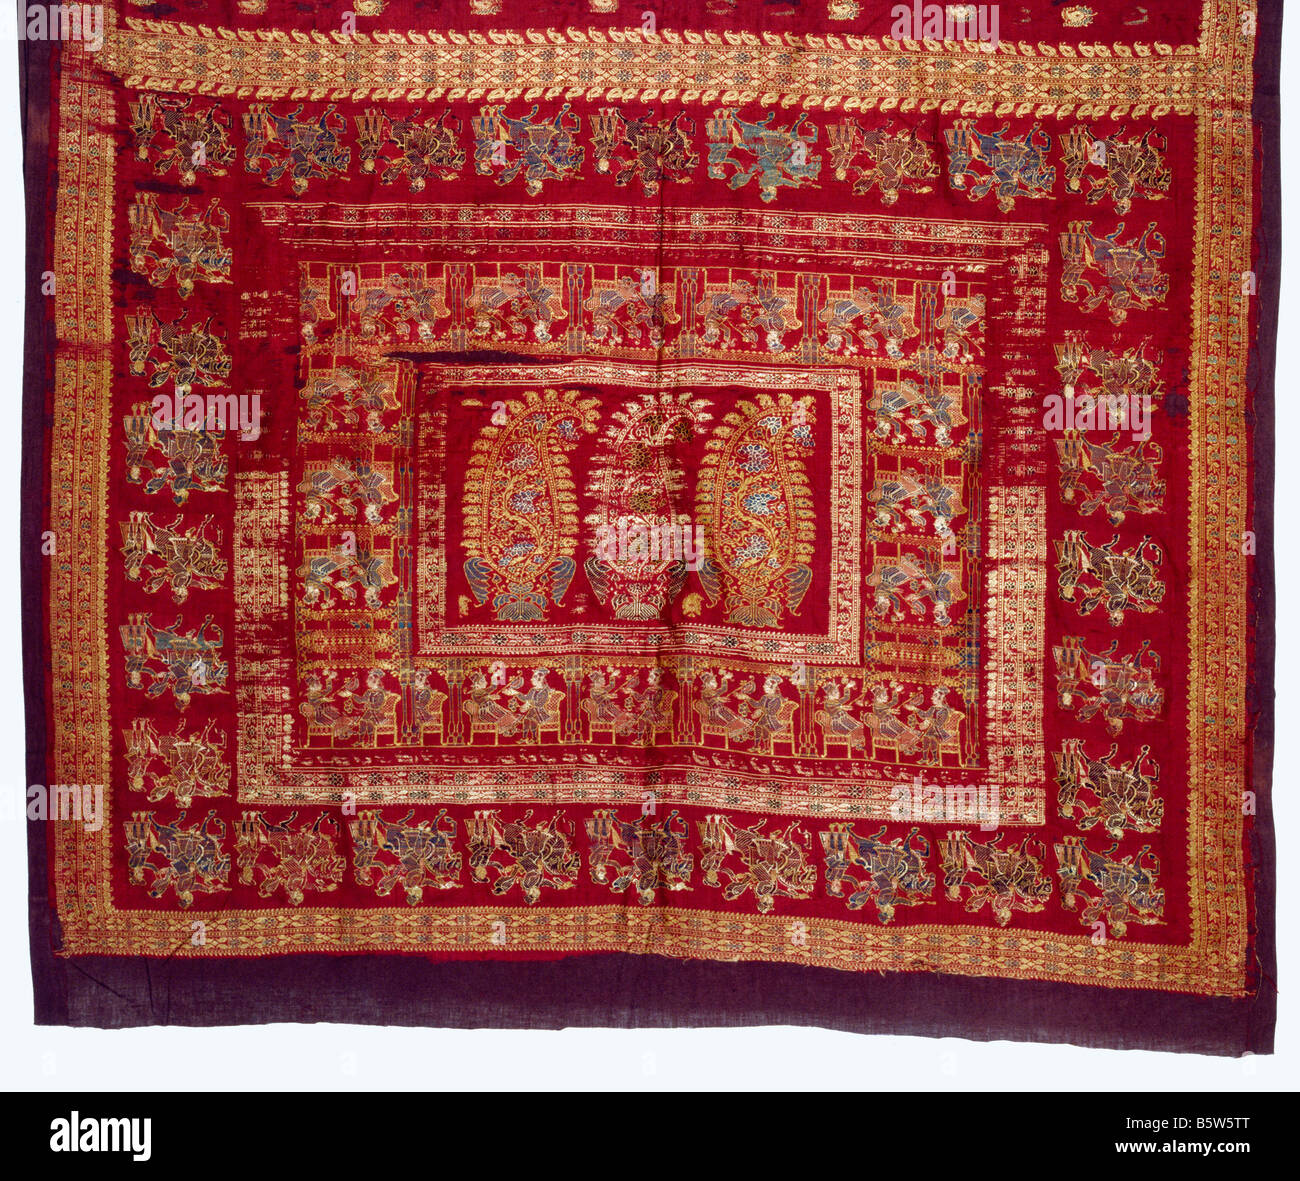 Kantha Baumwolle genäht & bestickt. Bengalen. des 19. Jahrhunderts. National Museum of New Delhi india61.388. 181 x 125 cm Stockfoto